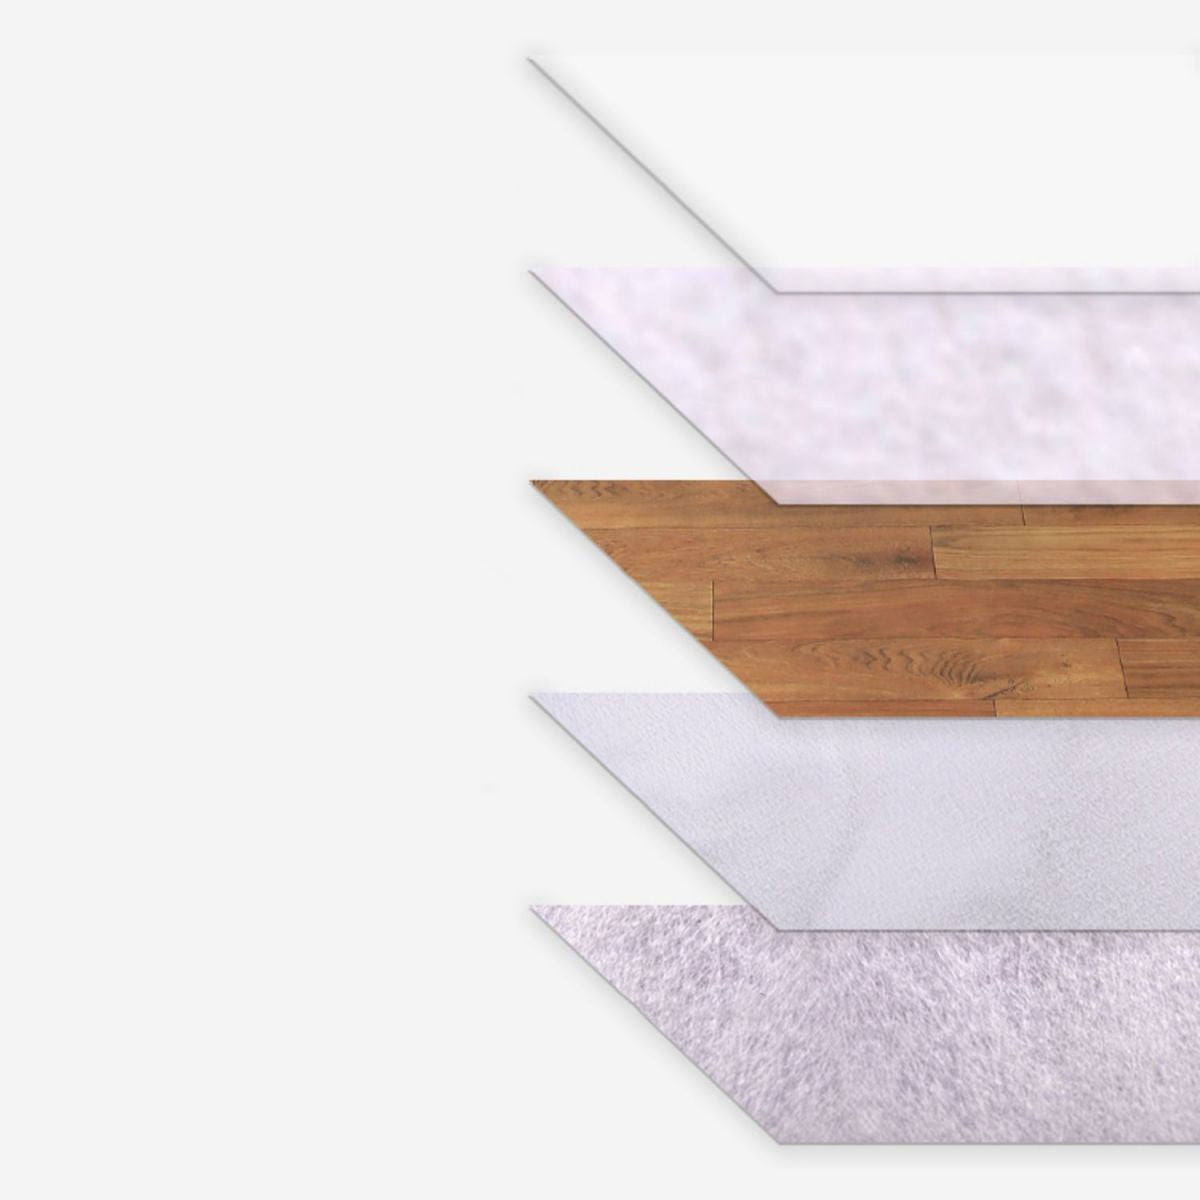 Waterproof PVC Flooring Wooden Effect Peel and Stick Fire Resistant PVC Flooring